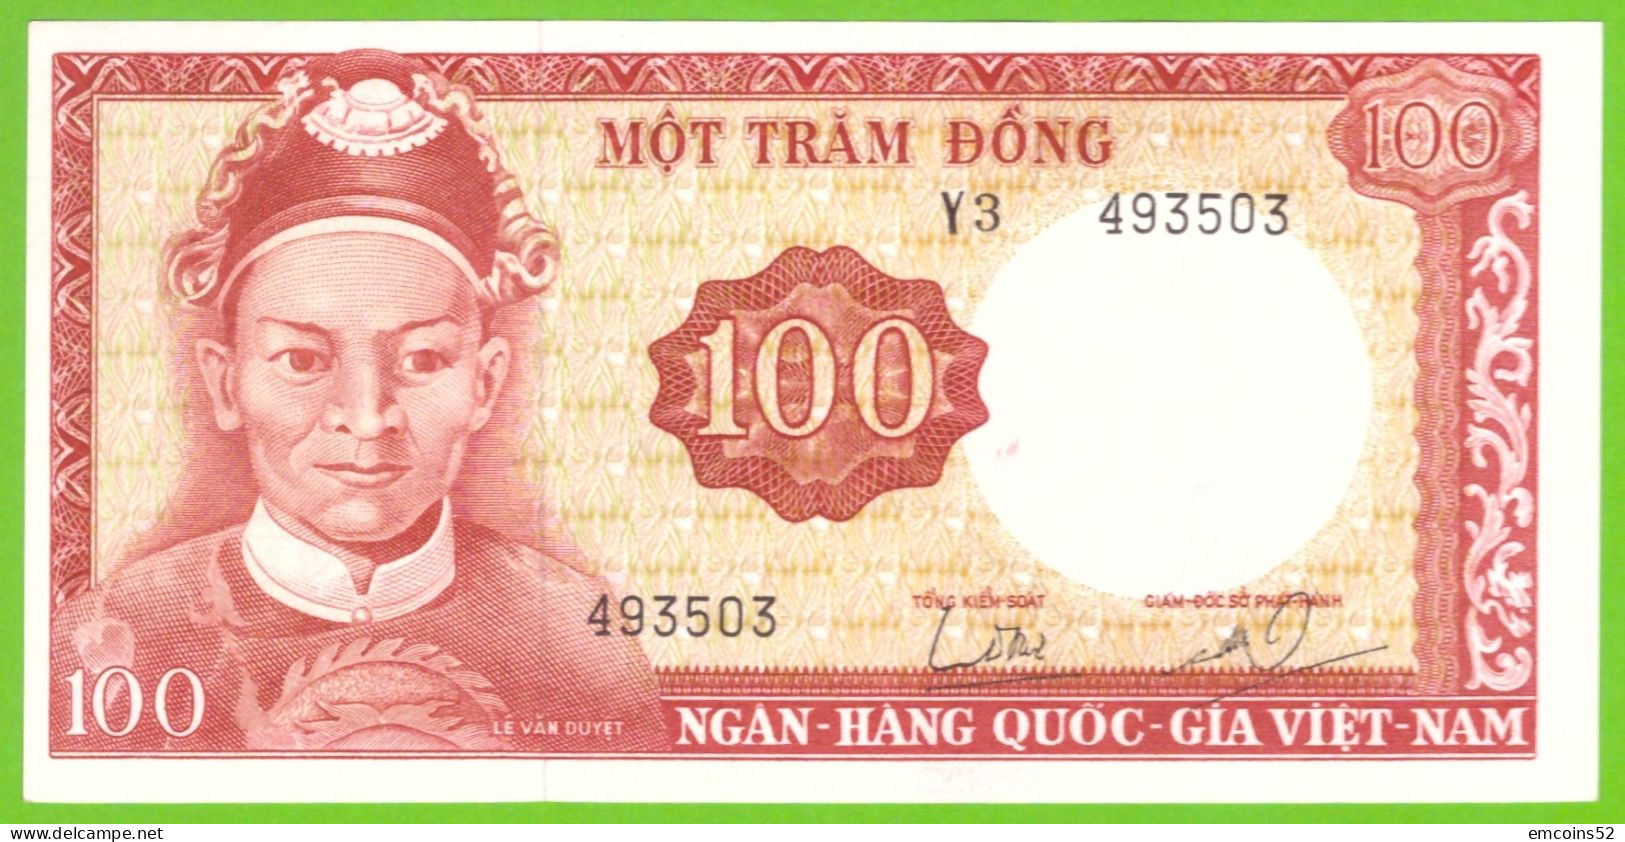 VIETNAM 100 DONG 1966  P-19b  UNC - Viêt-Nam